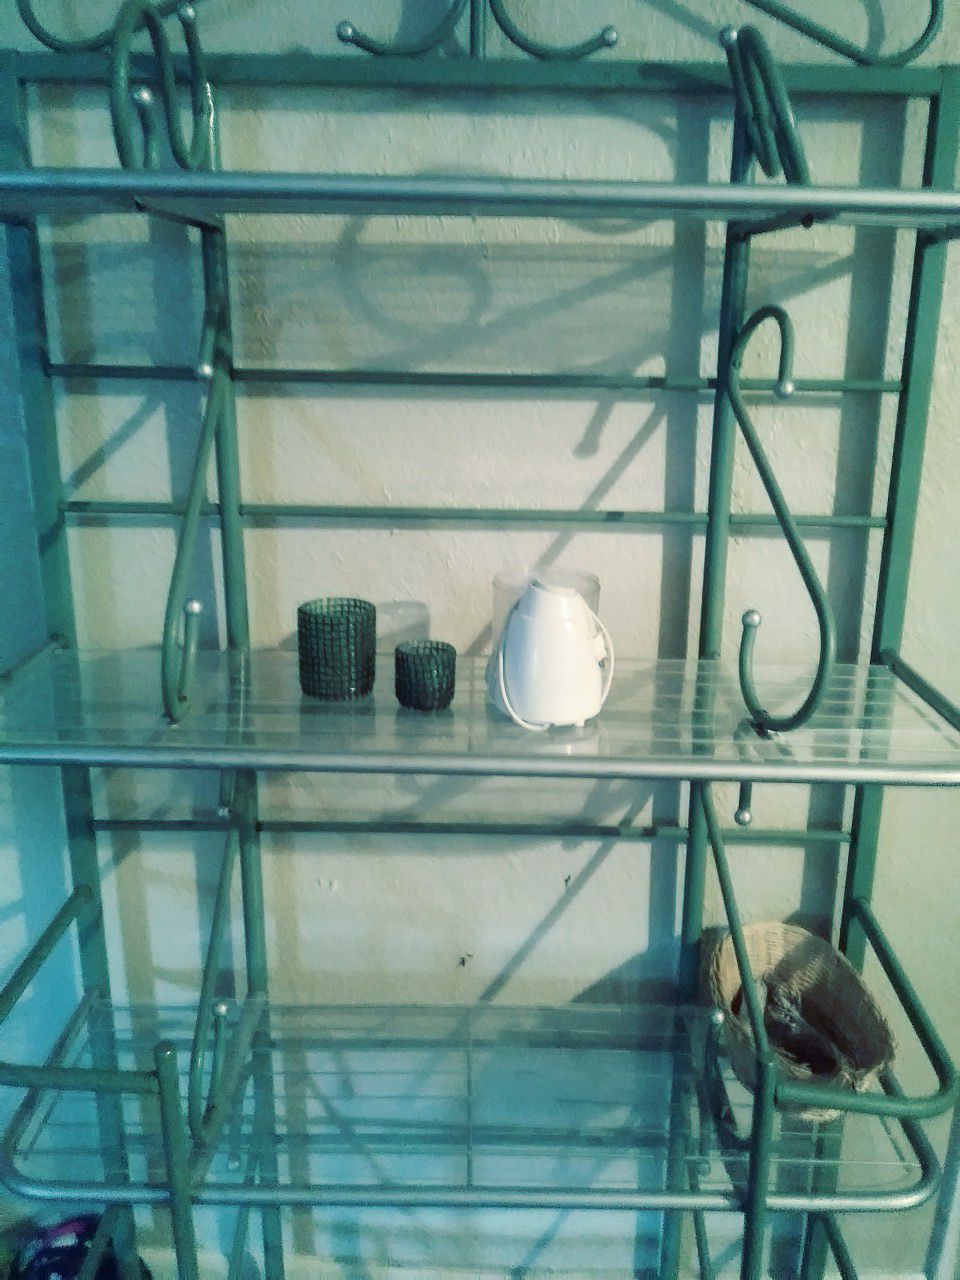 Metal and plexiglass shelves